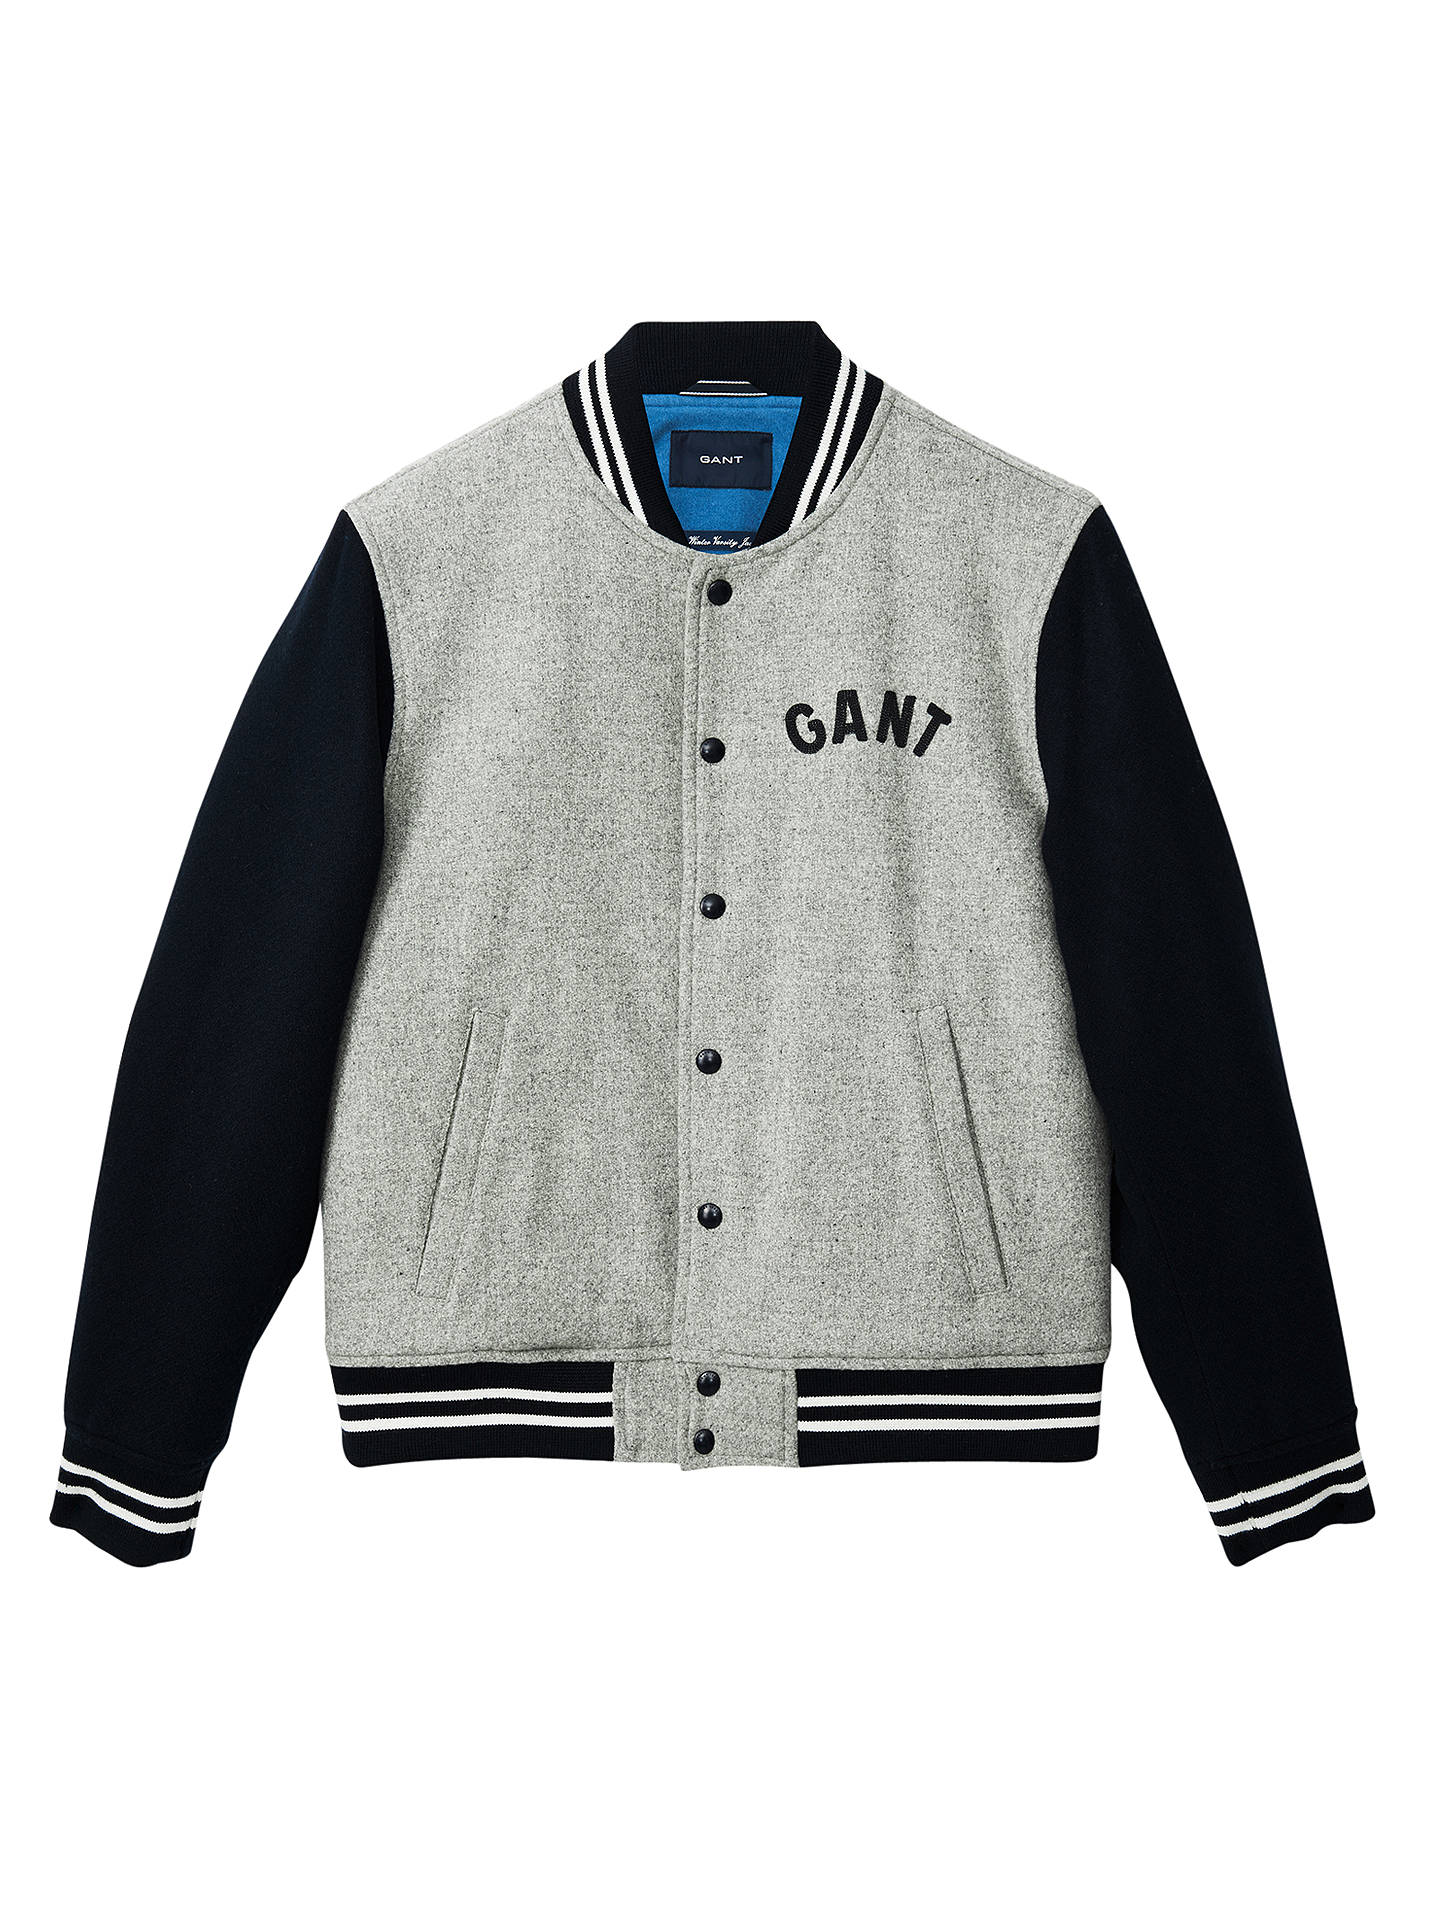 Gant Varsity Bomber Jacket, Grey at John Lewis & Partners